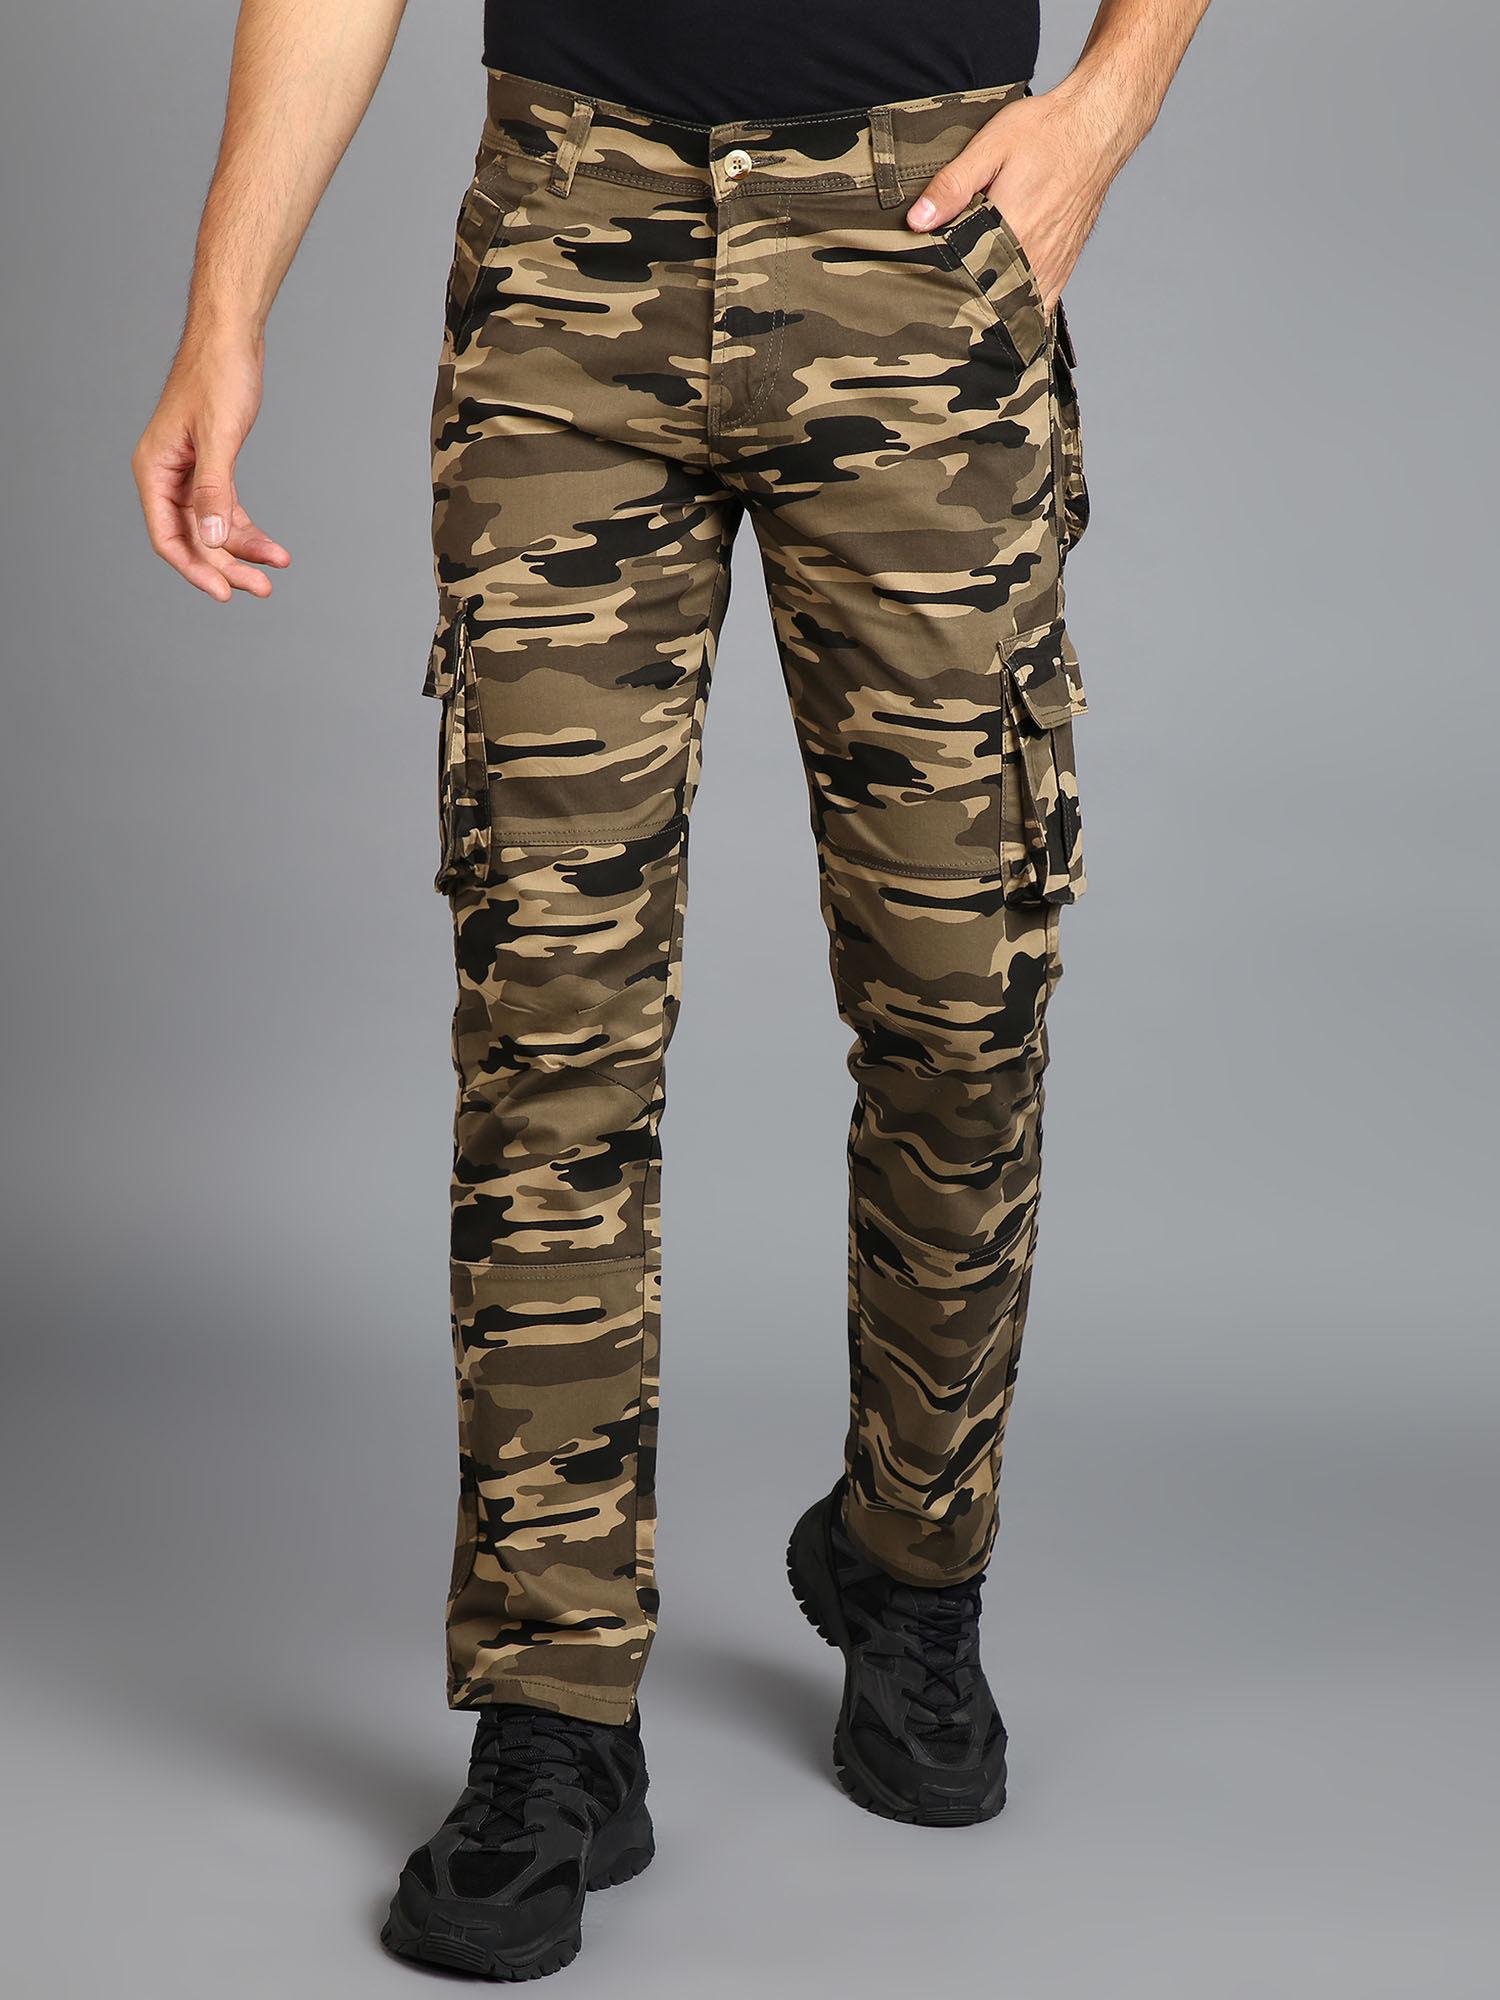 mens-khaki-regular-fit-military-camouflage-cargo-chino-pant